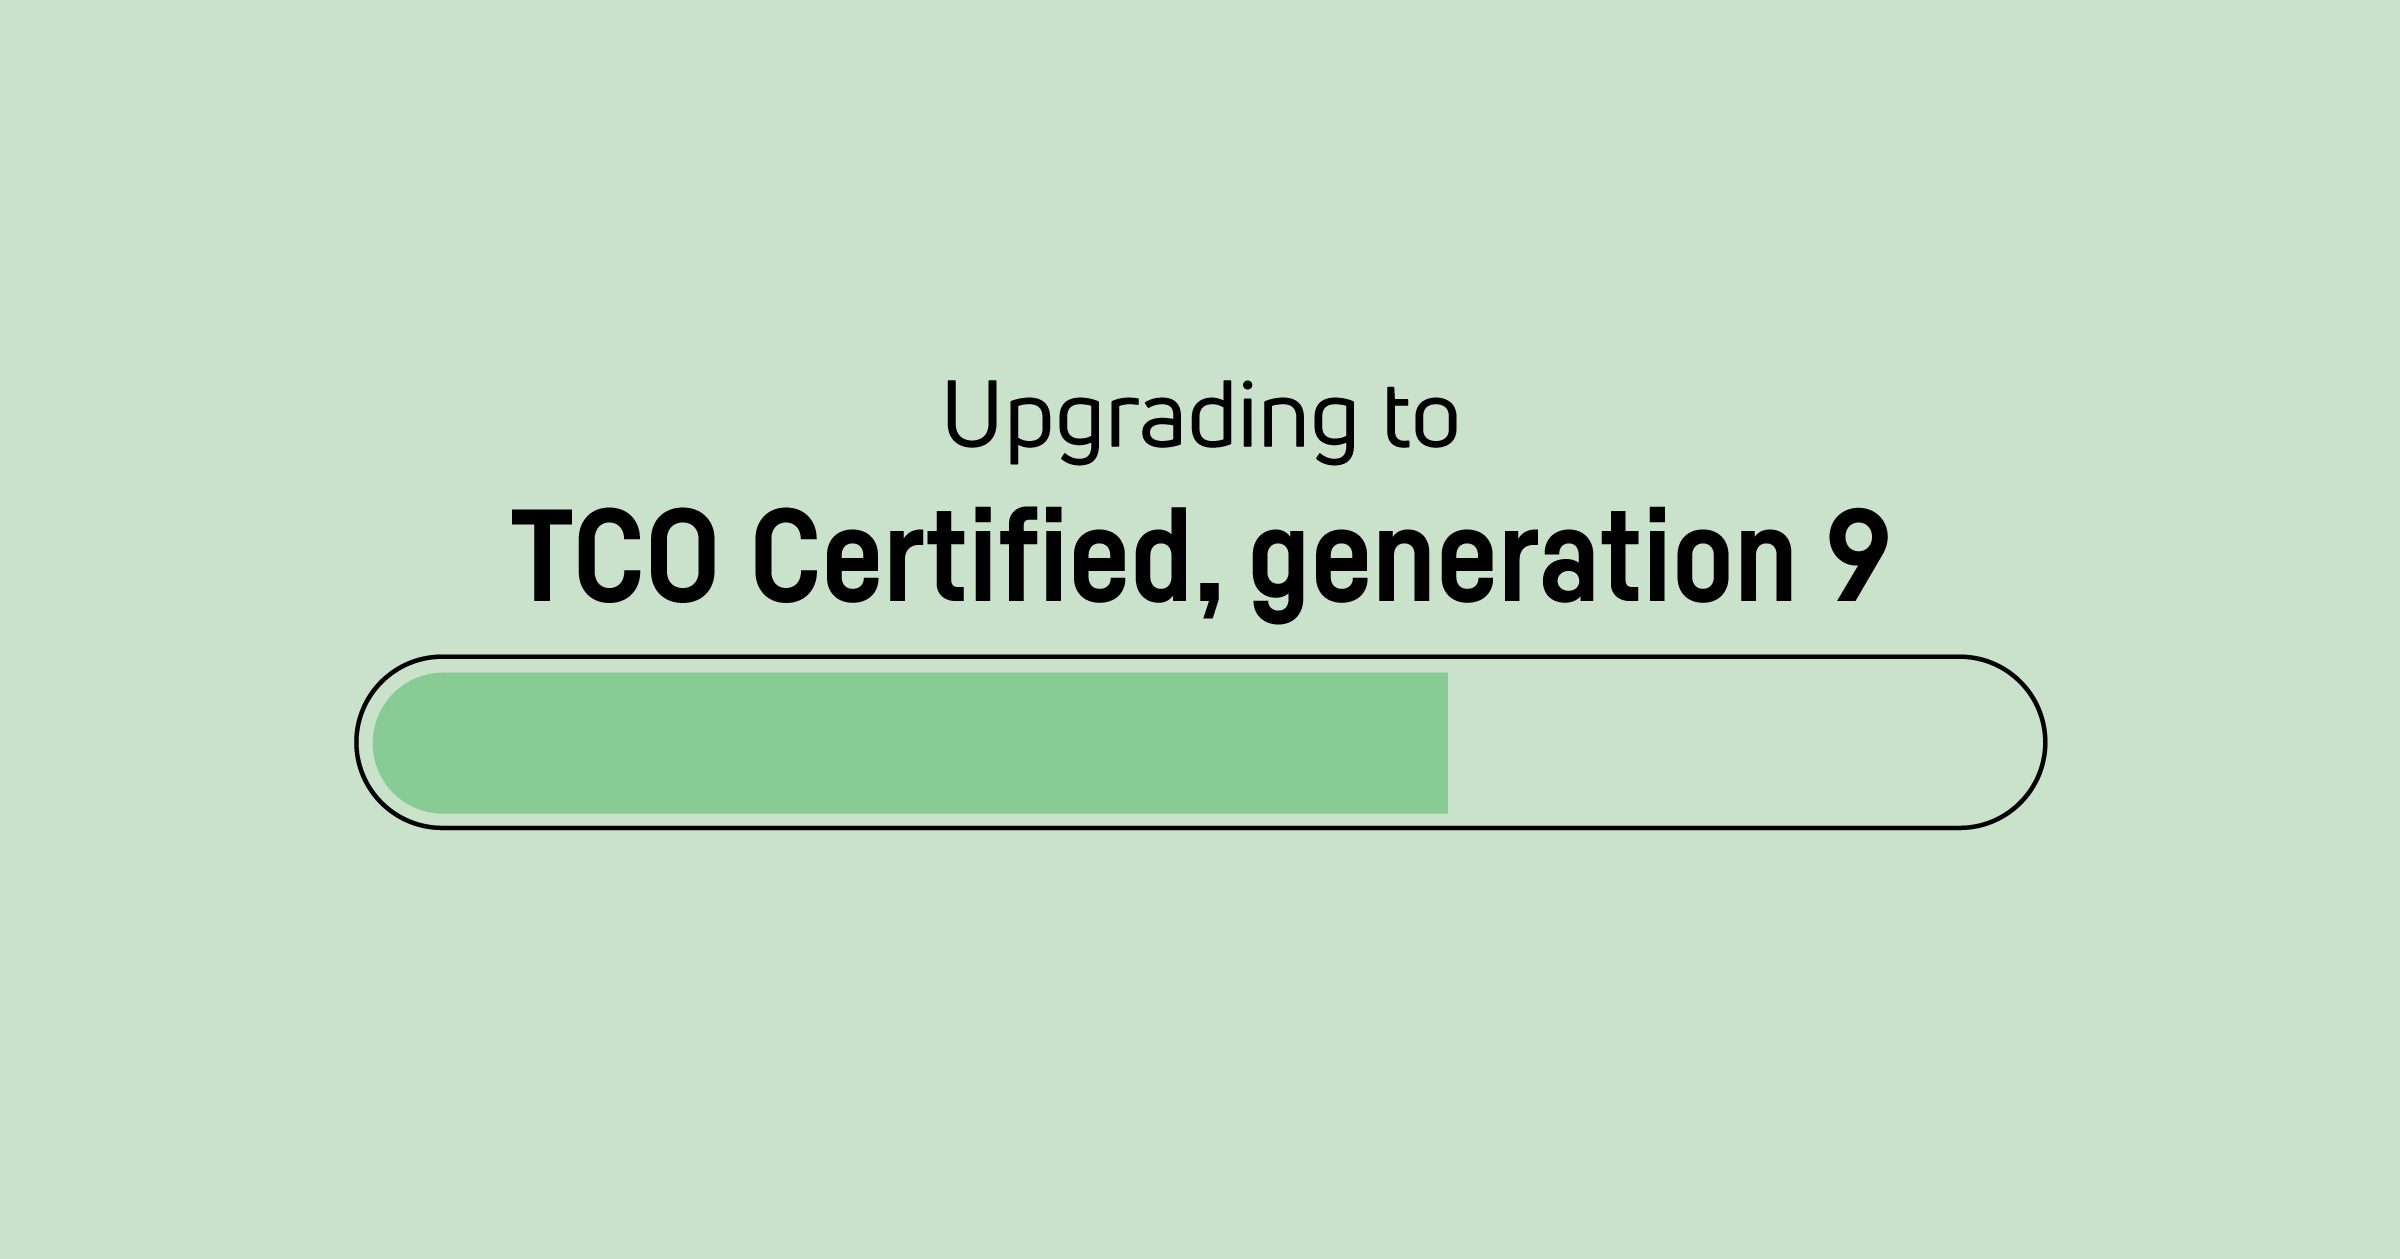 升級時間 TCO Certified, generation 8 證書